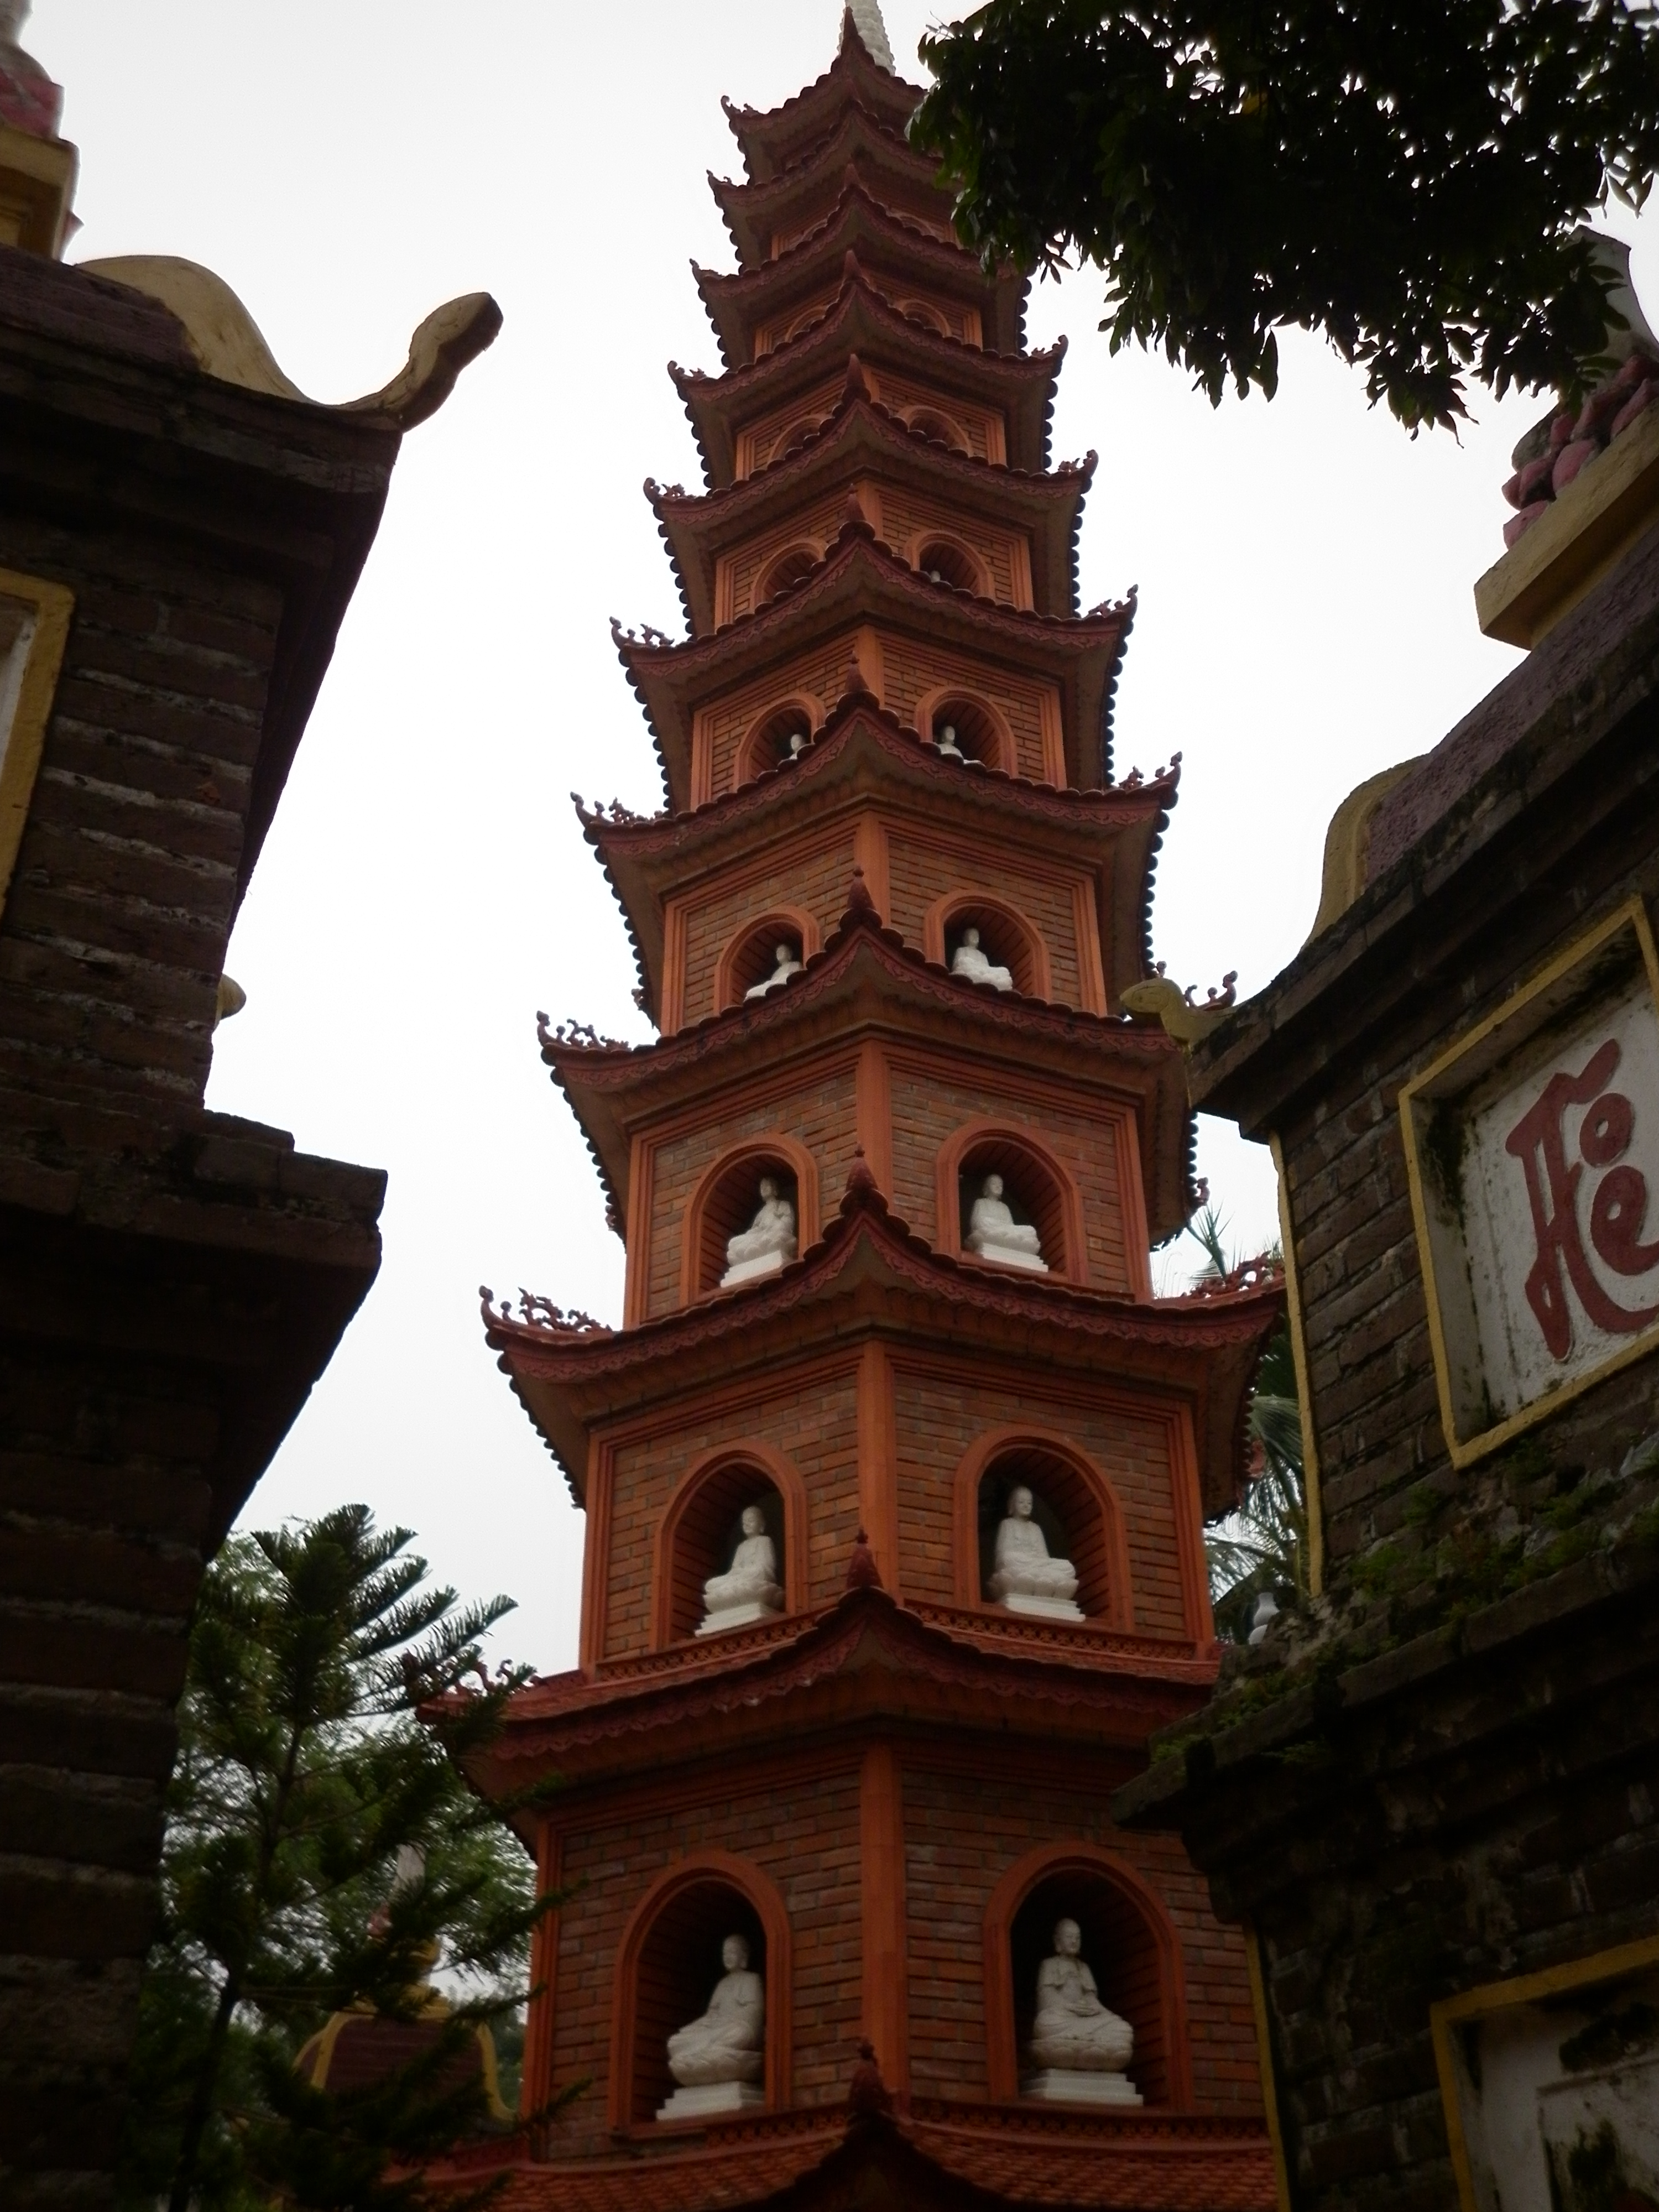 Tran Quoc Pagoda, the oldest pagoda in Hanoi